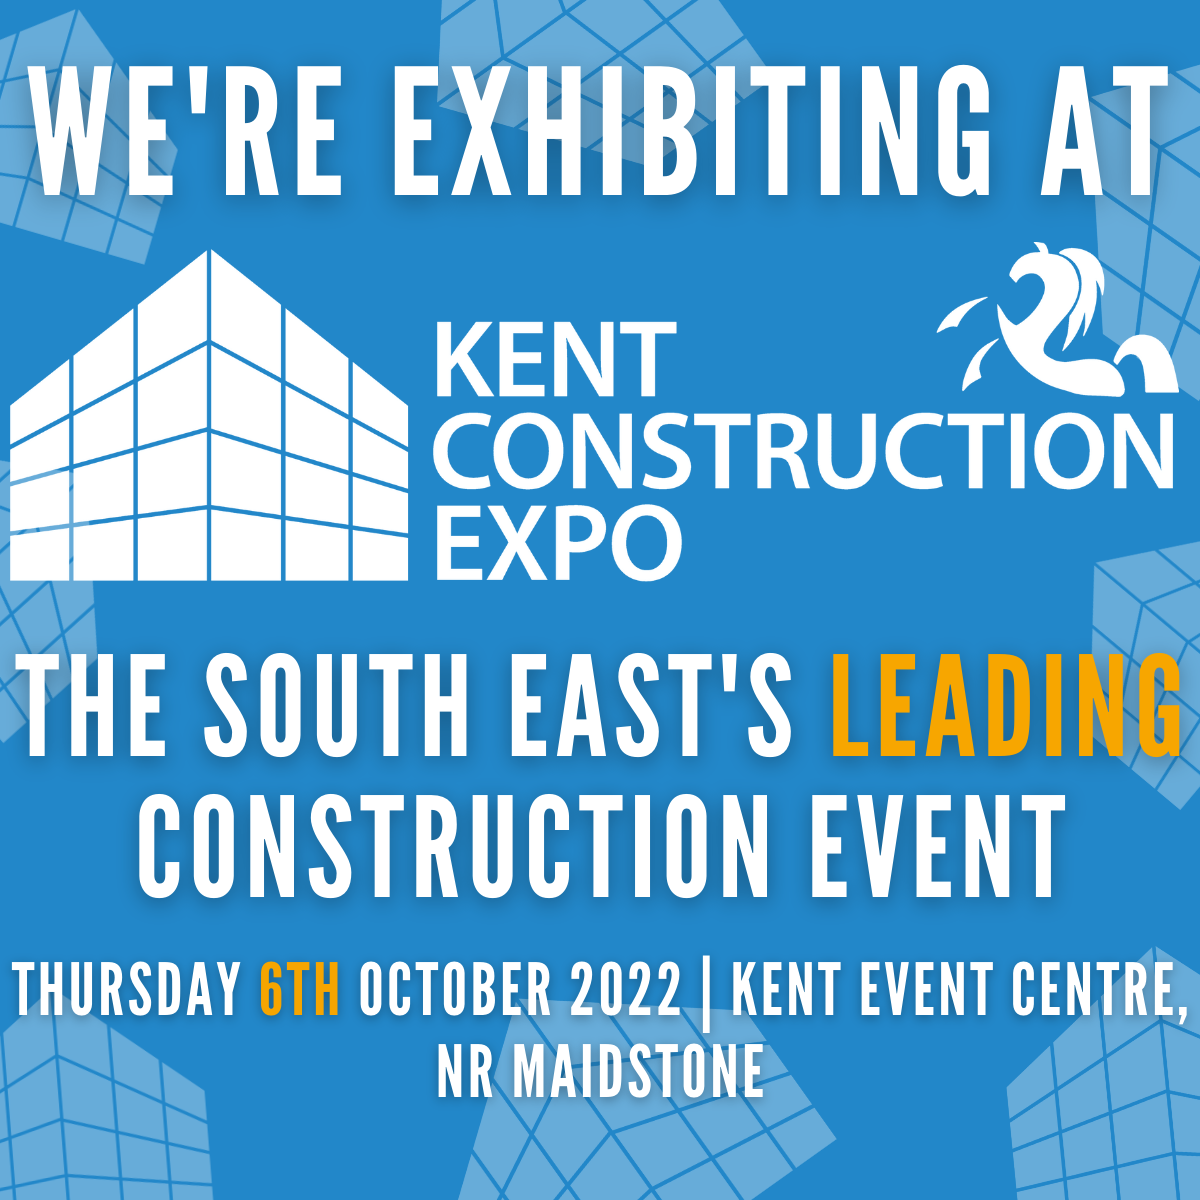 Kent Construction Expo